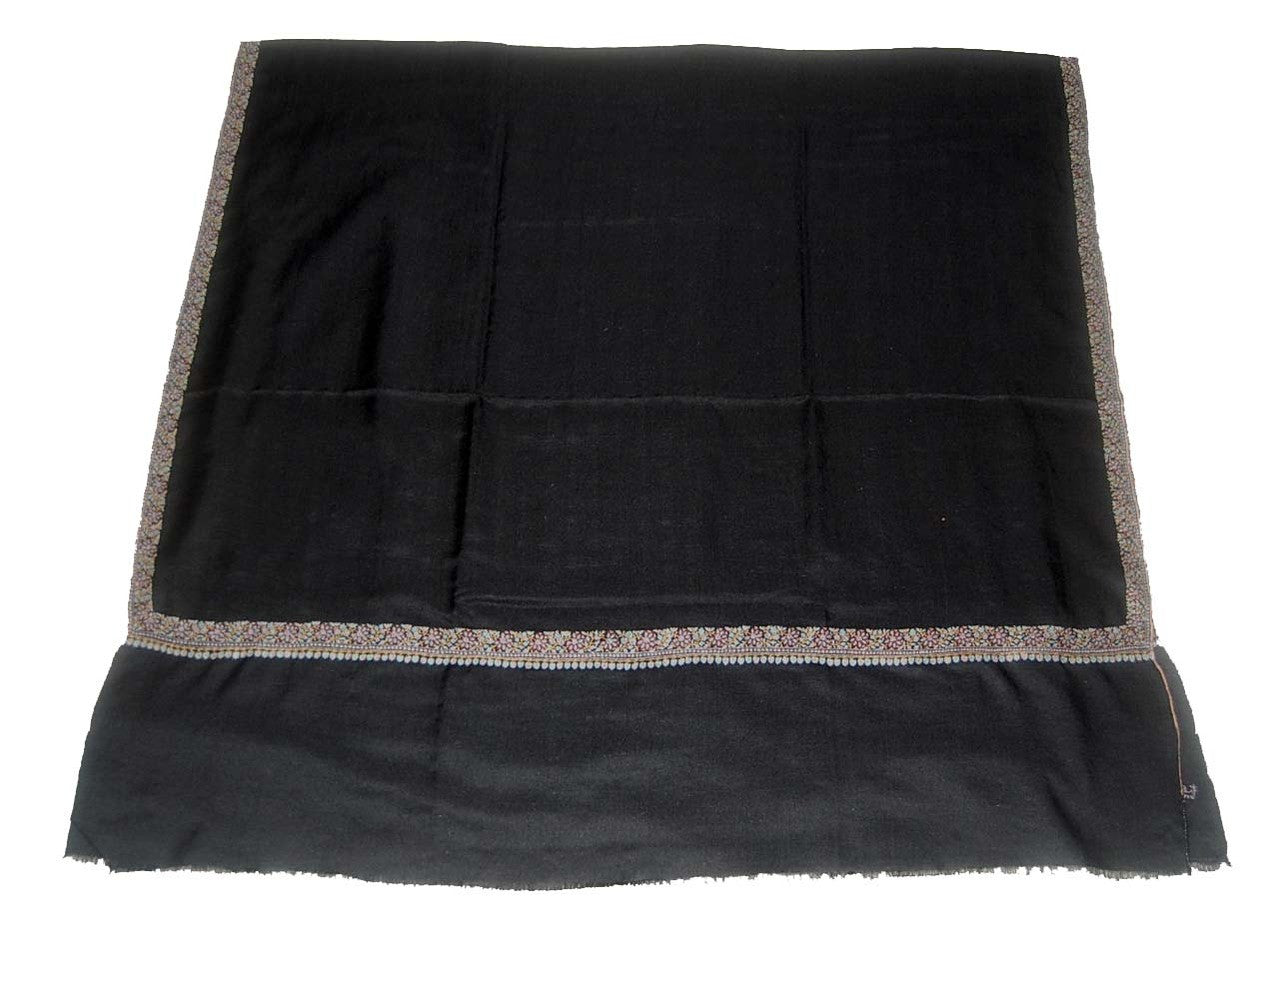 Handloom Pashmina "Cashmere" Embroidered Shawl Black, Multicolor #PDR-003